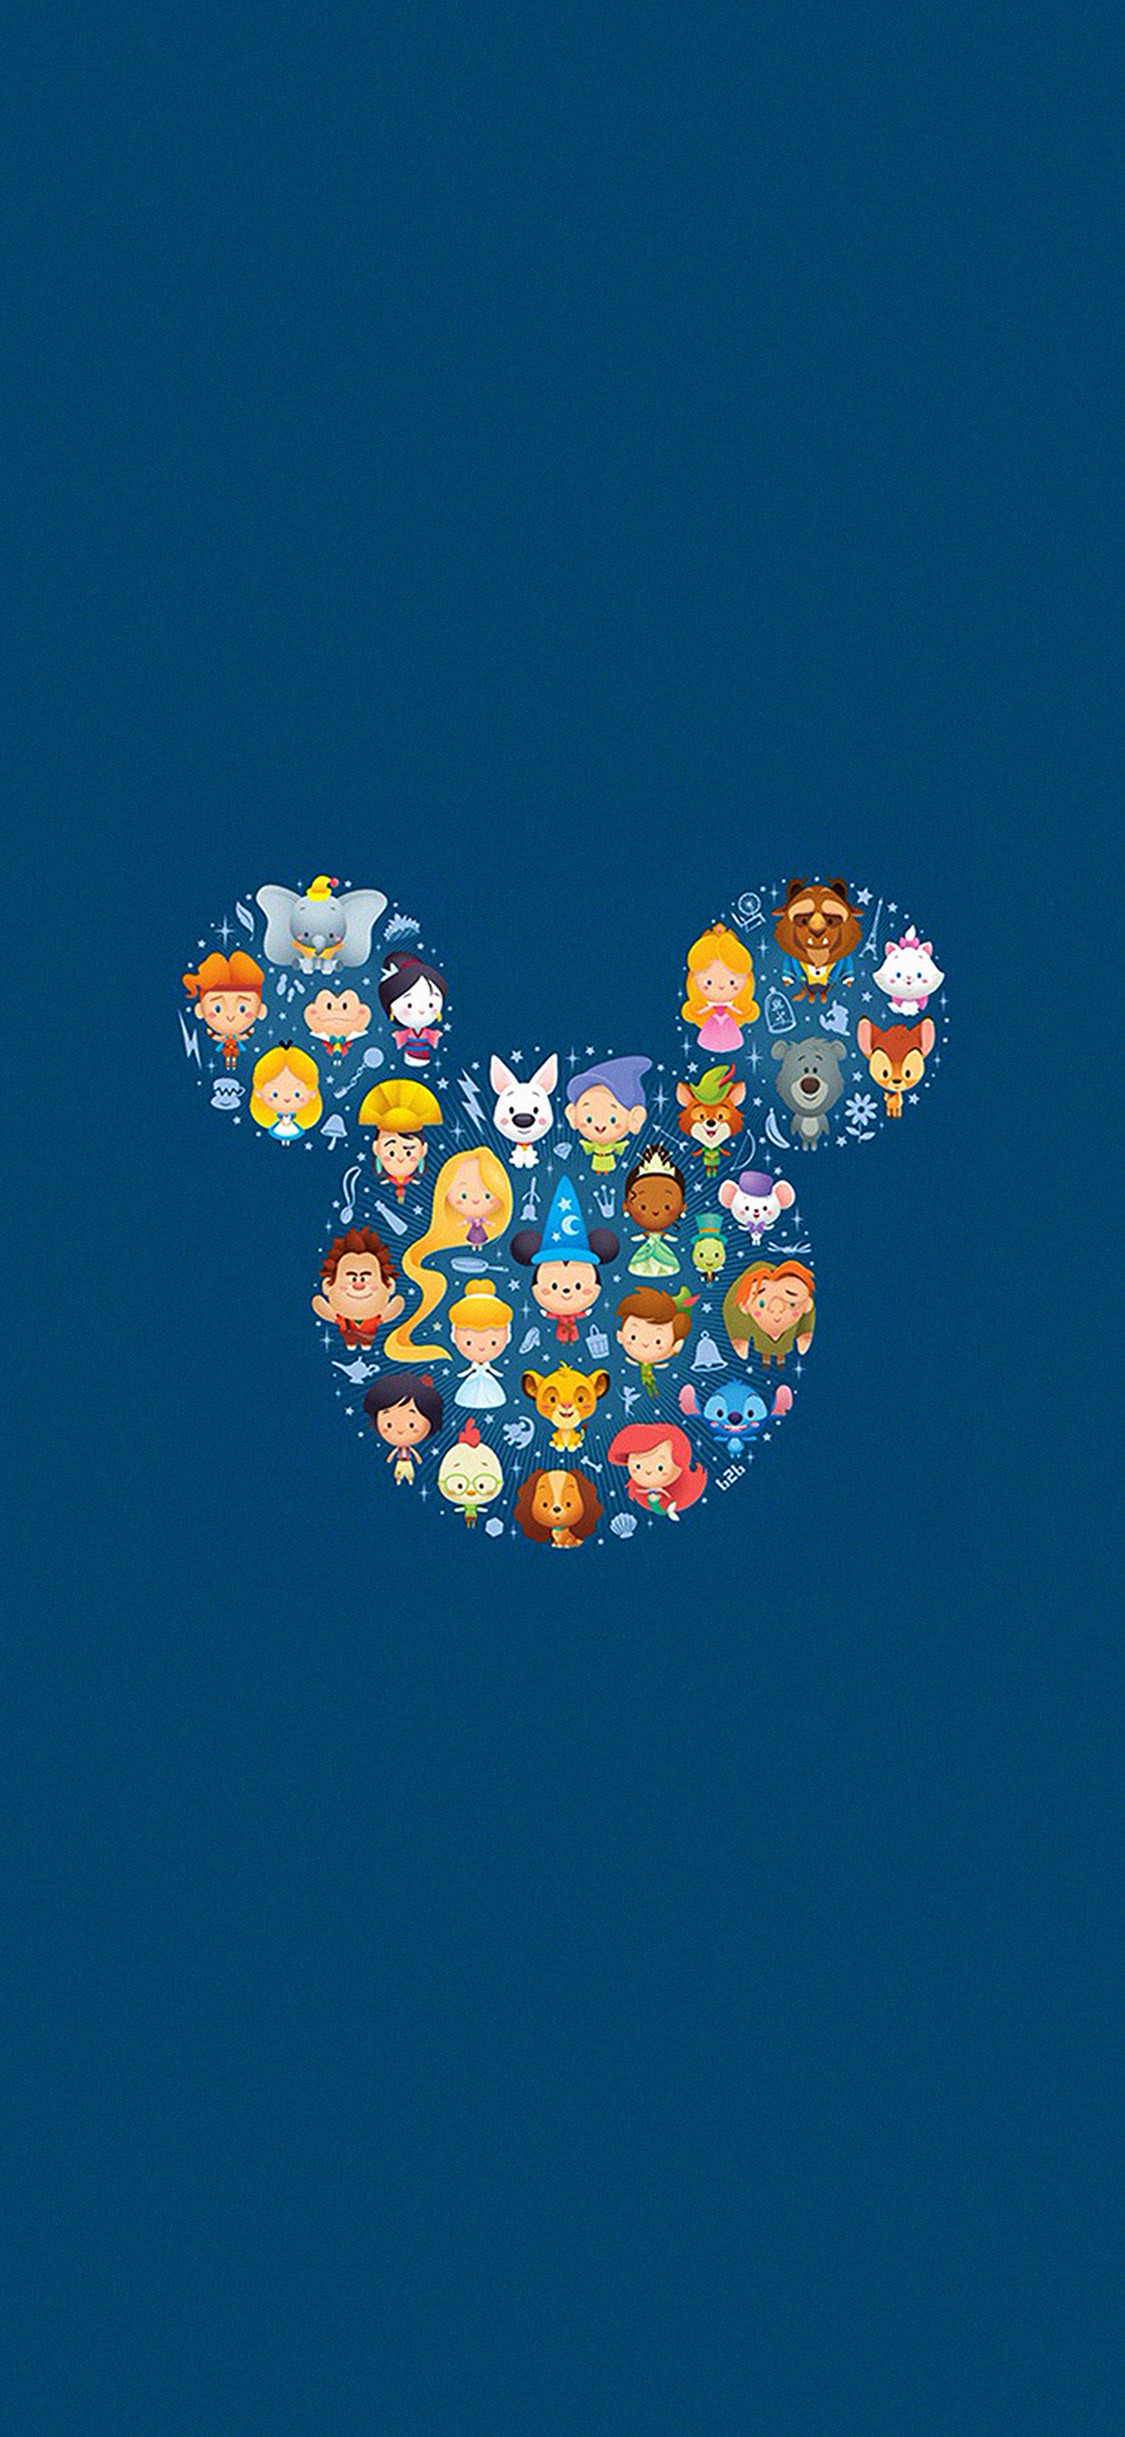 1125x2437 Cute Disney characters iPhone X Wallpaper